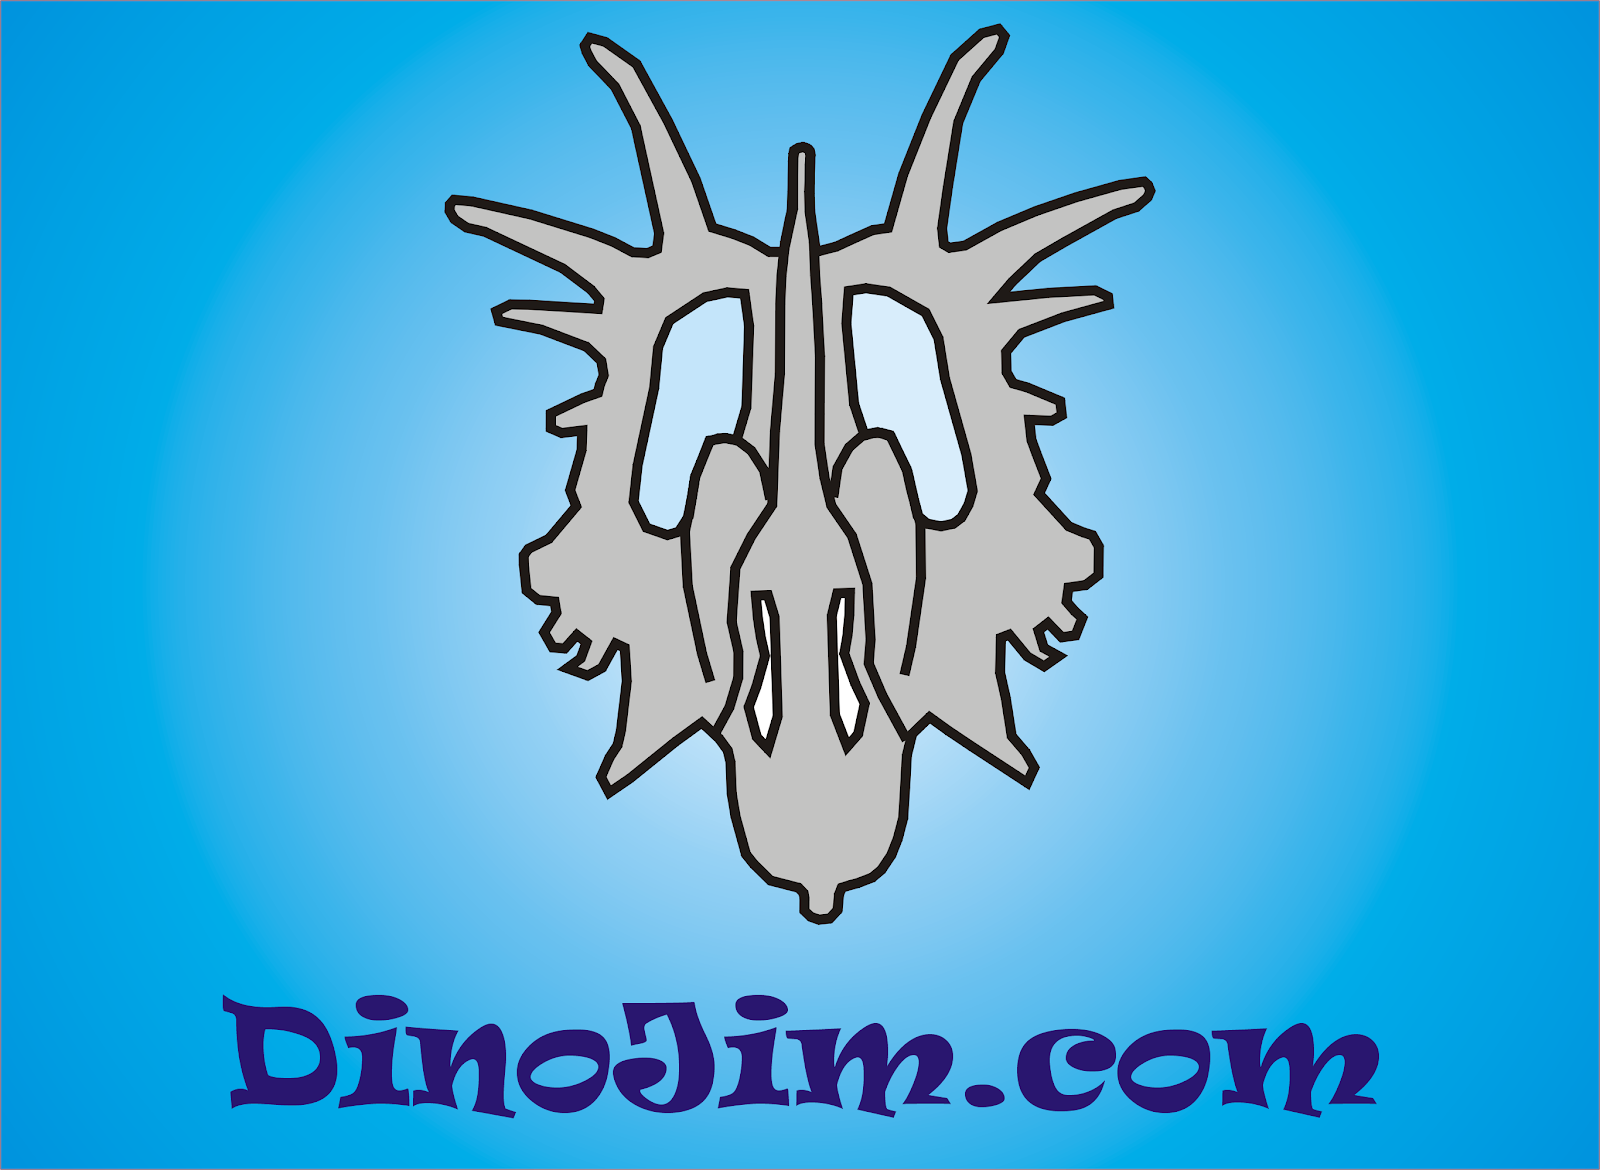 Dinojim.com